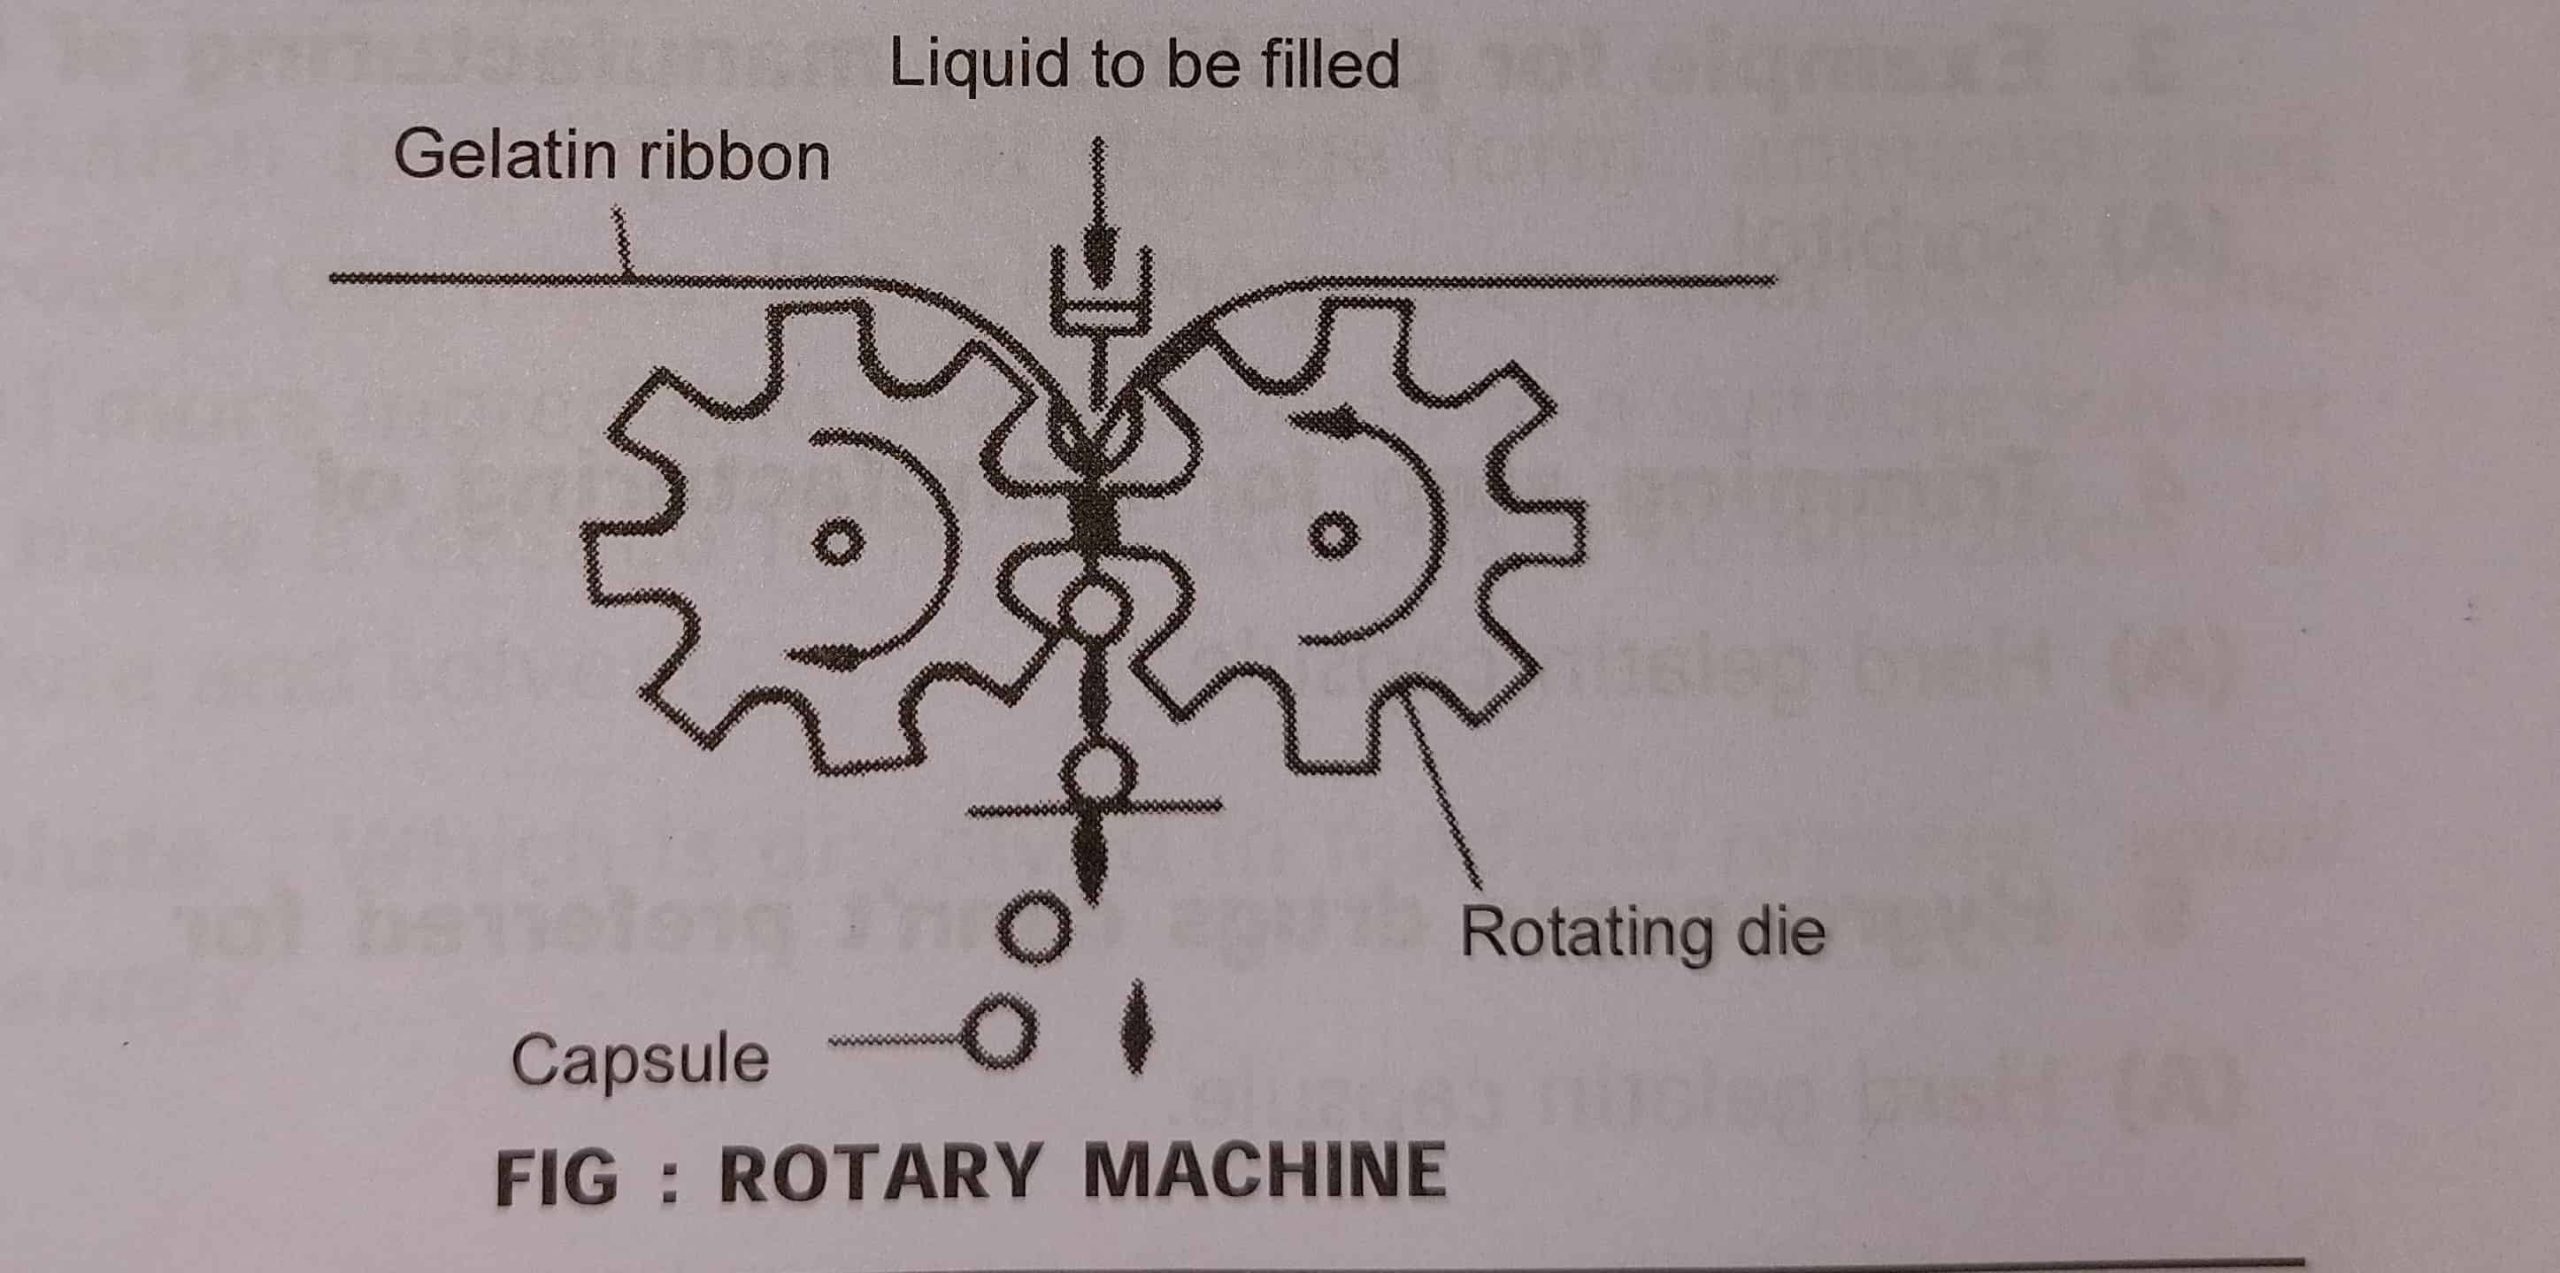 Preparation of soft gelatin capsule by rotary die process